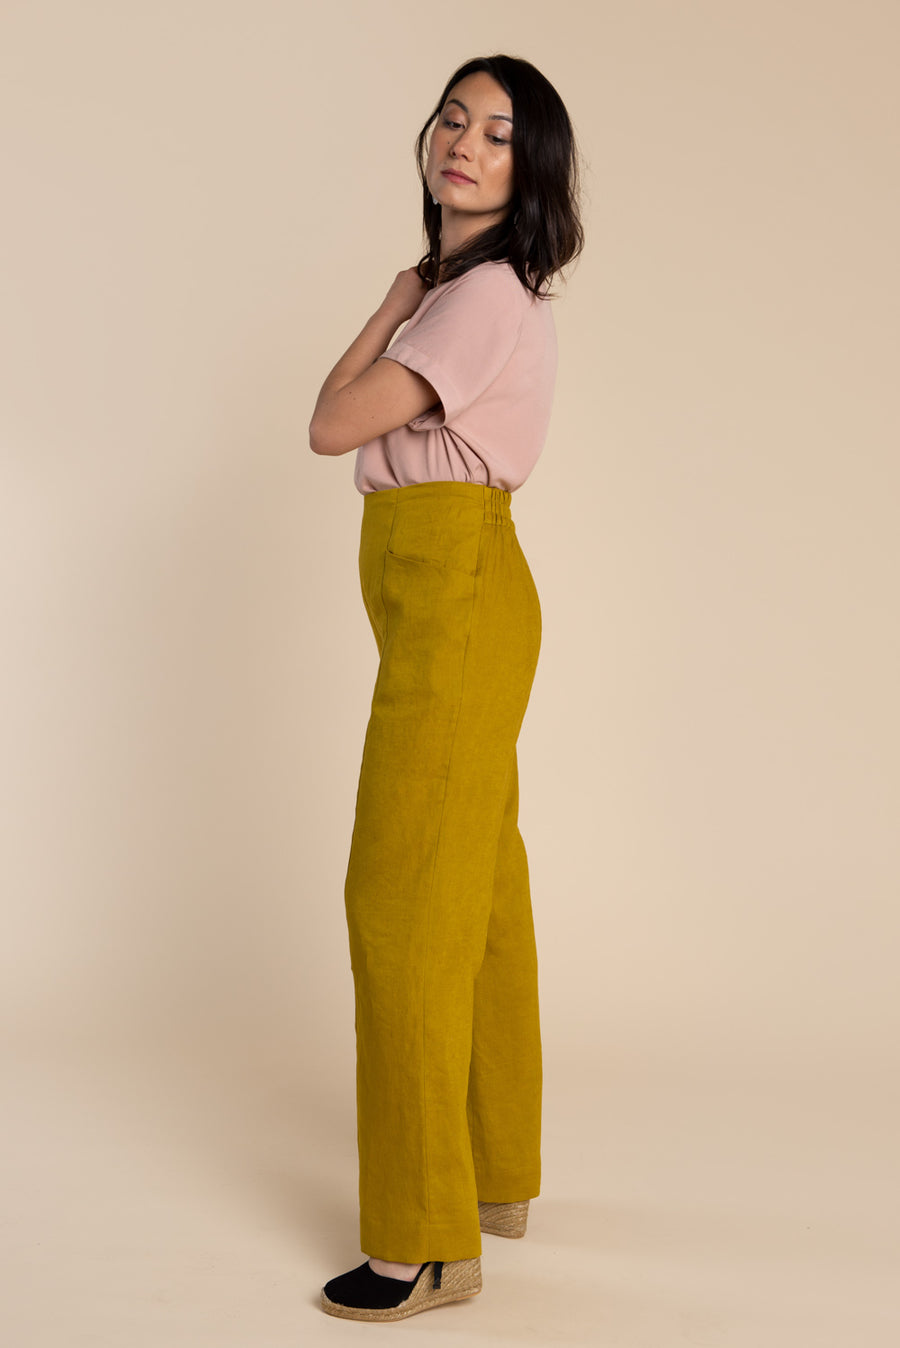 Zara Denim Shorts Try On Haul for Pear Shaped Body 